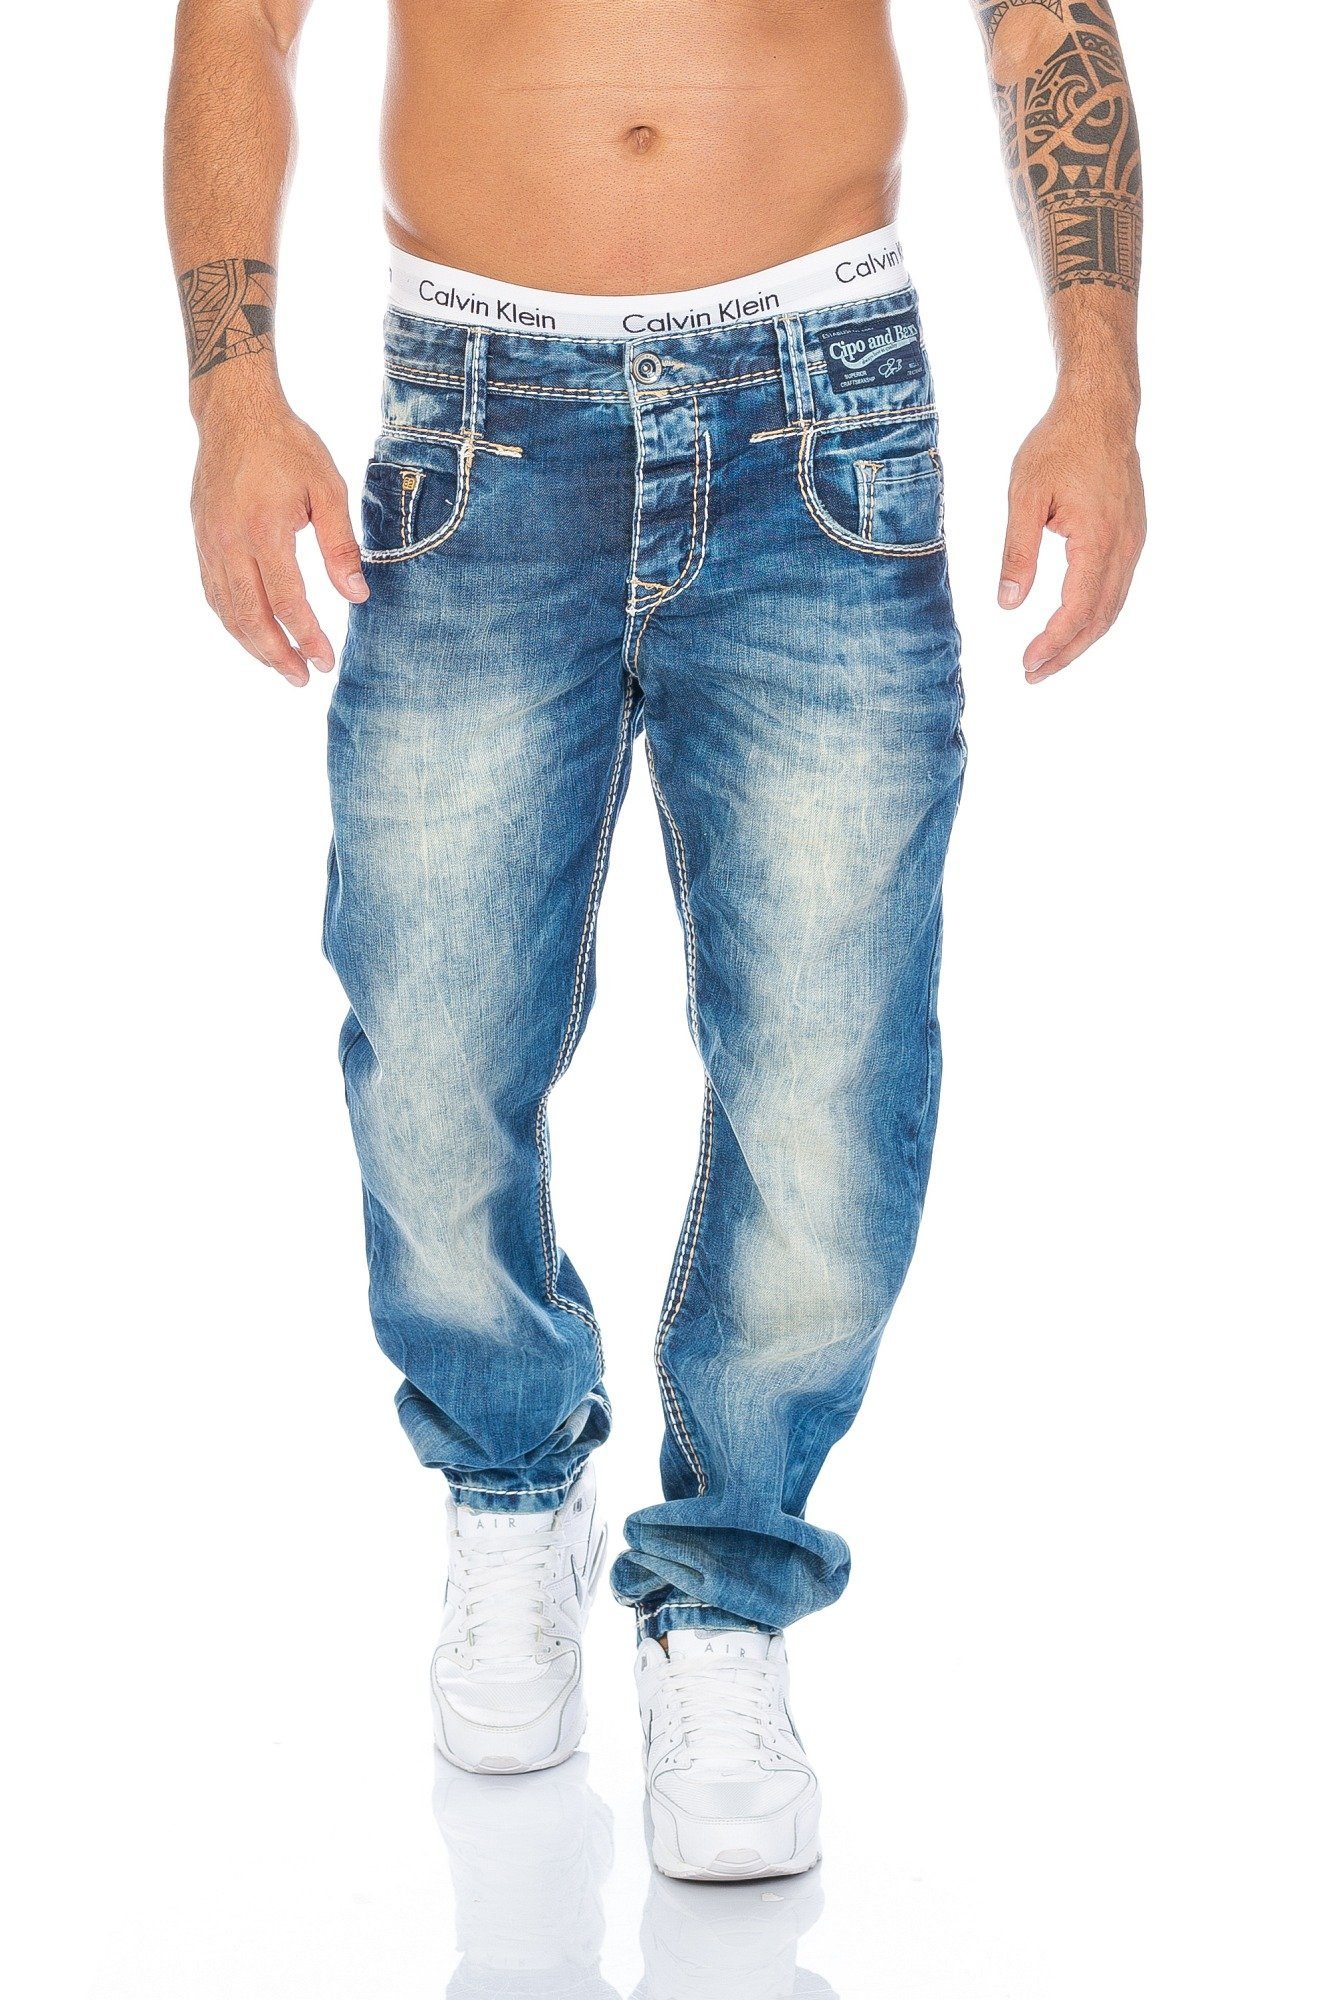 Cipo & Baxx Slim-fit-Jeans Herren Jeans Hose mit dicken Kontrastnähten